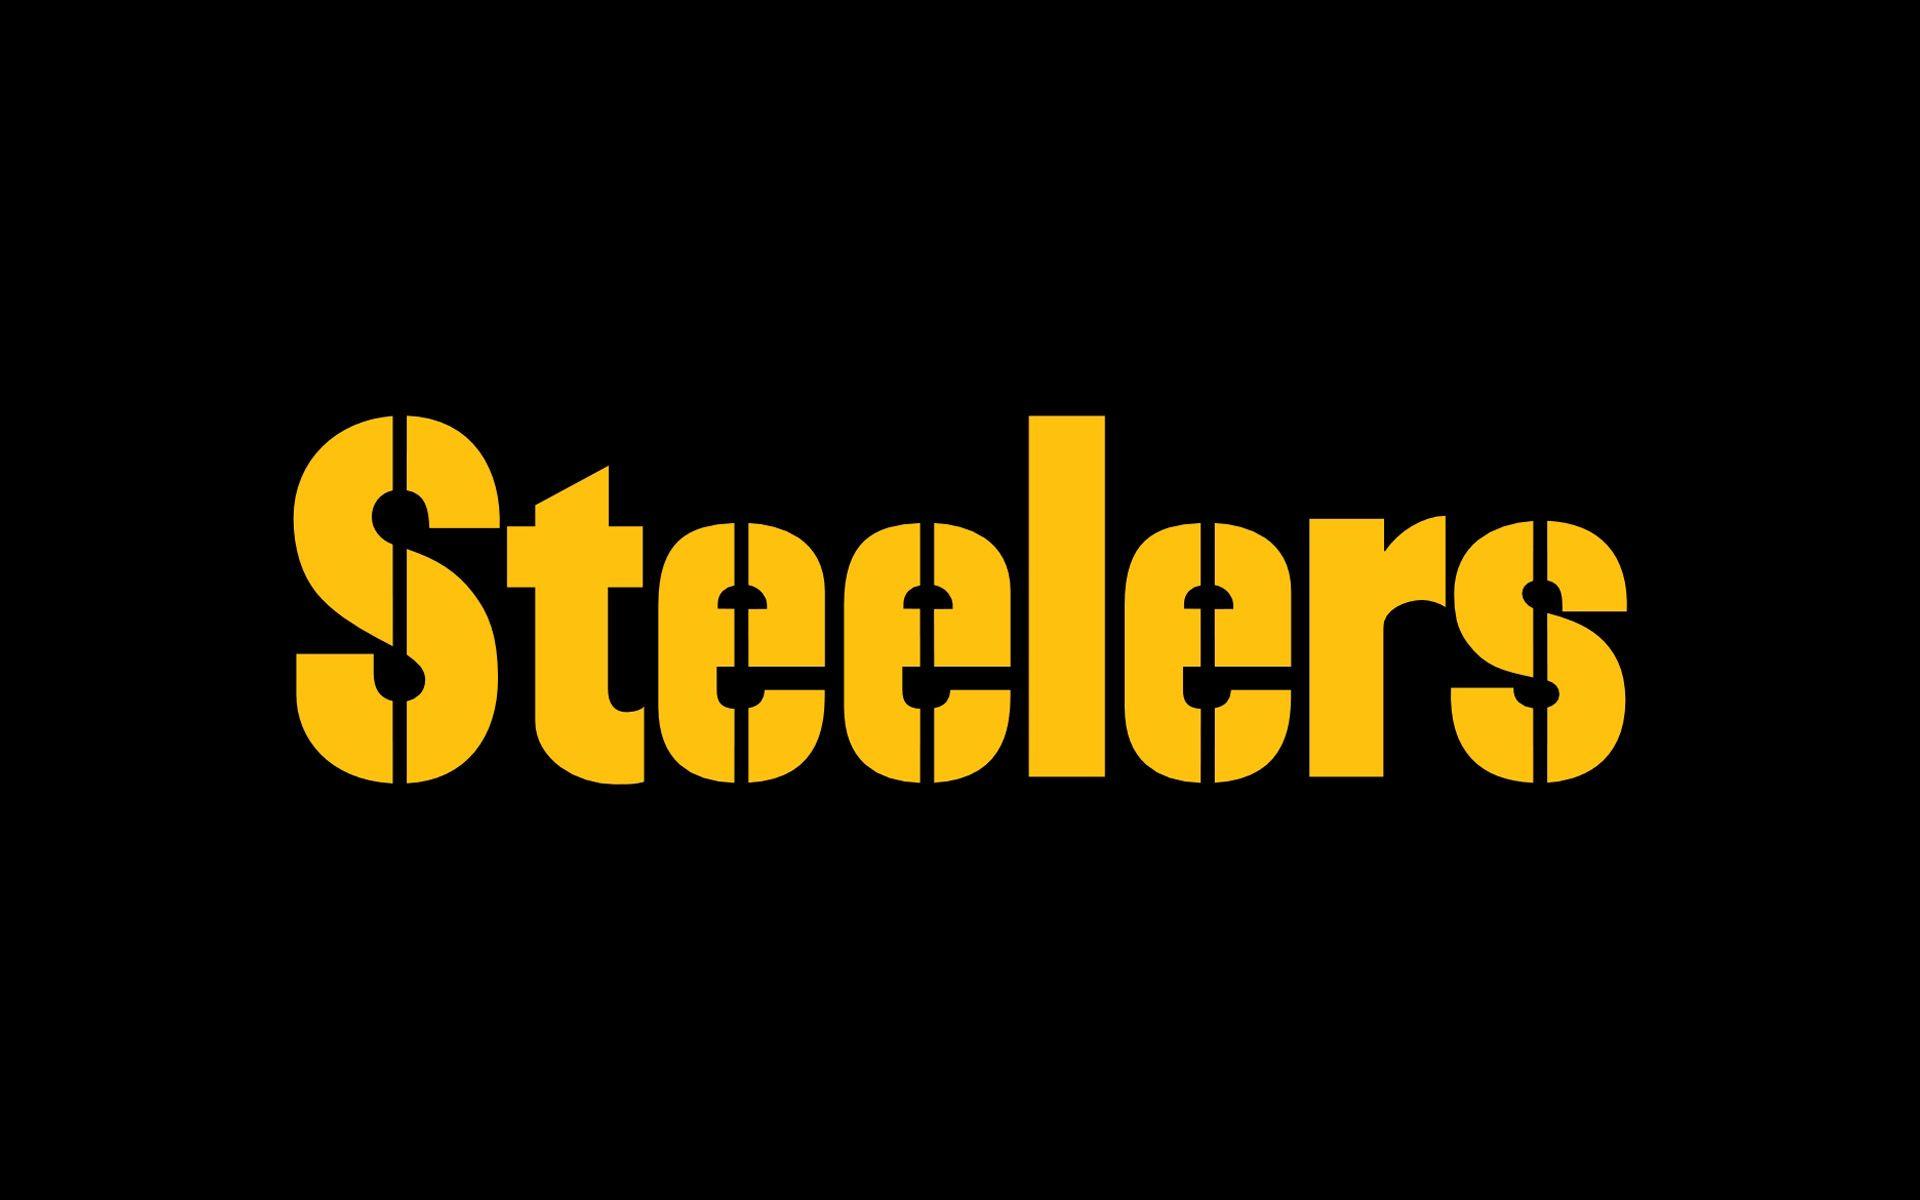 Pittsburgh High Resolution Wallpaper: Steelers HD Wallpaper